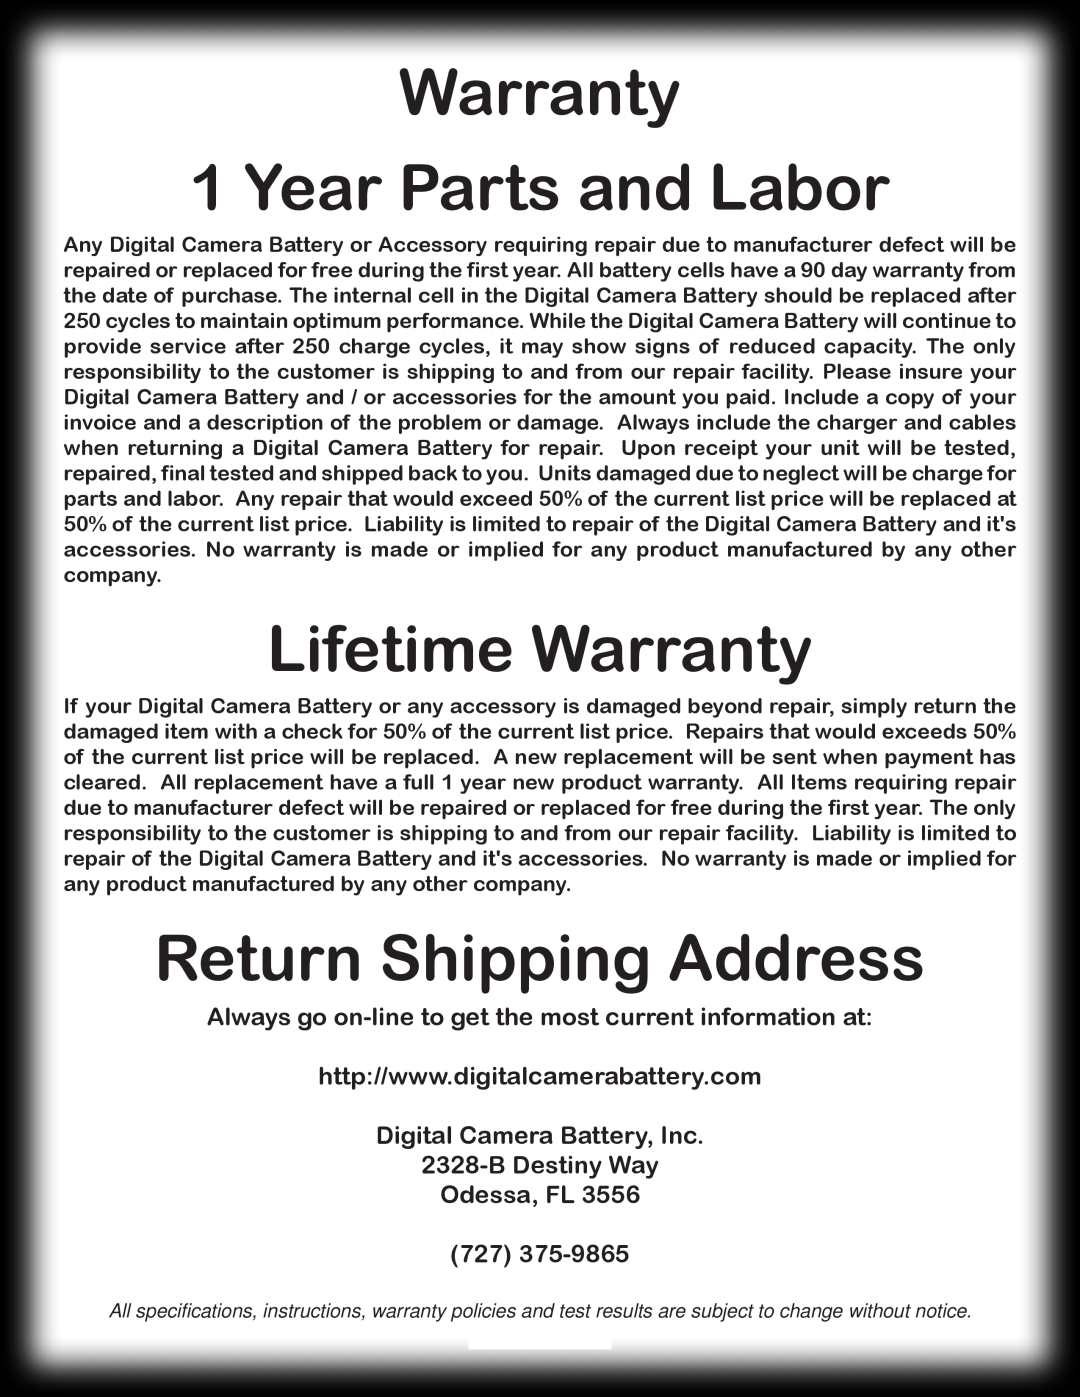 Digital Camera Battery DCB80WB manual Warranty 1 Year Parts and Labor, Return Shipping Address 